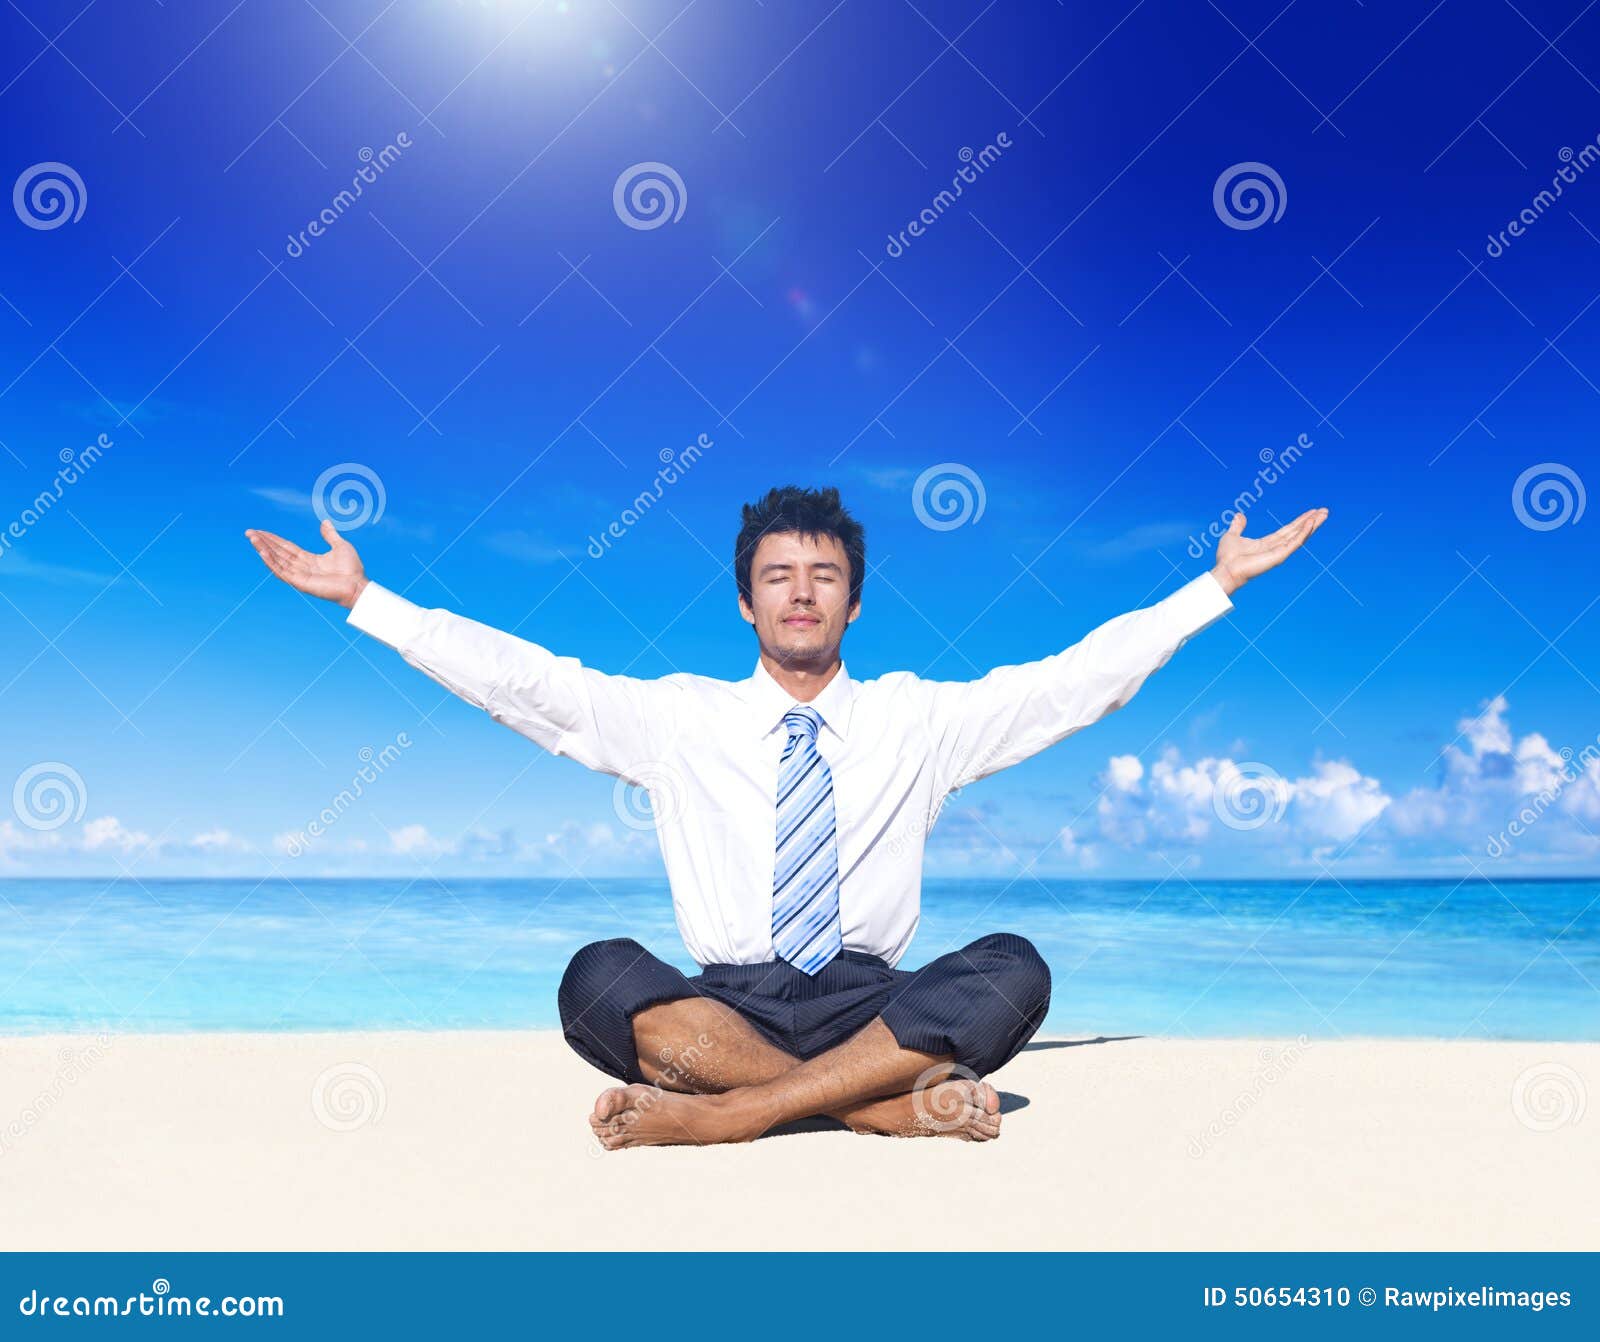 business meditation beach refreshment concept